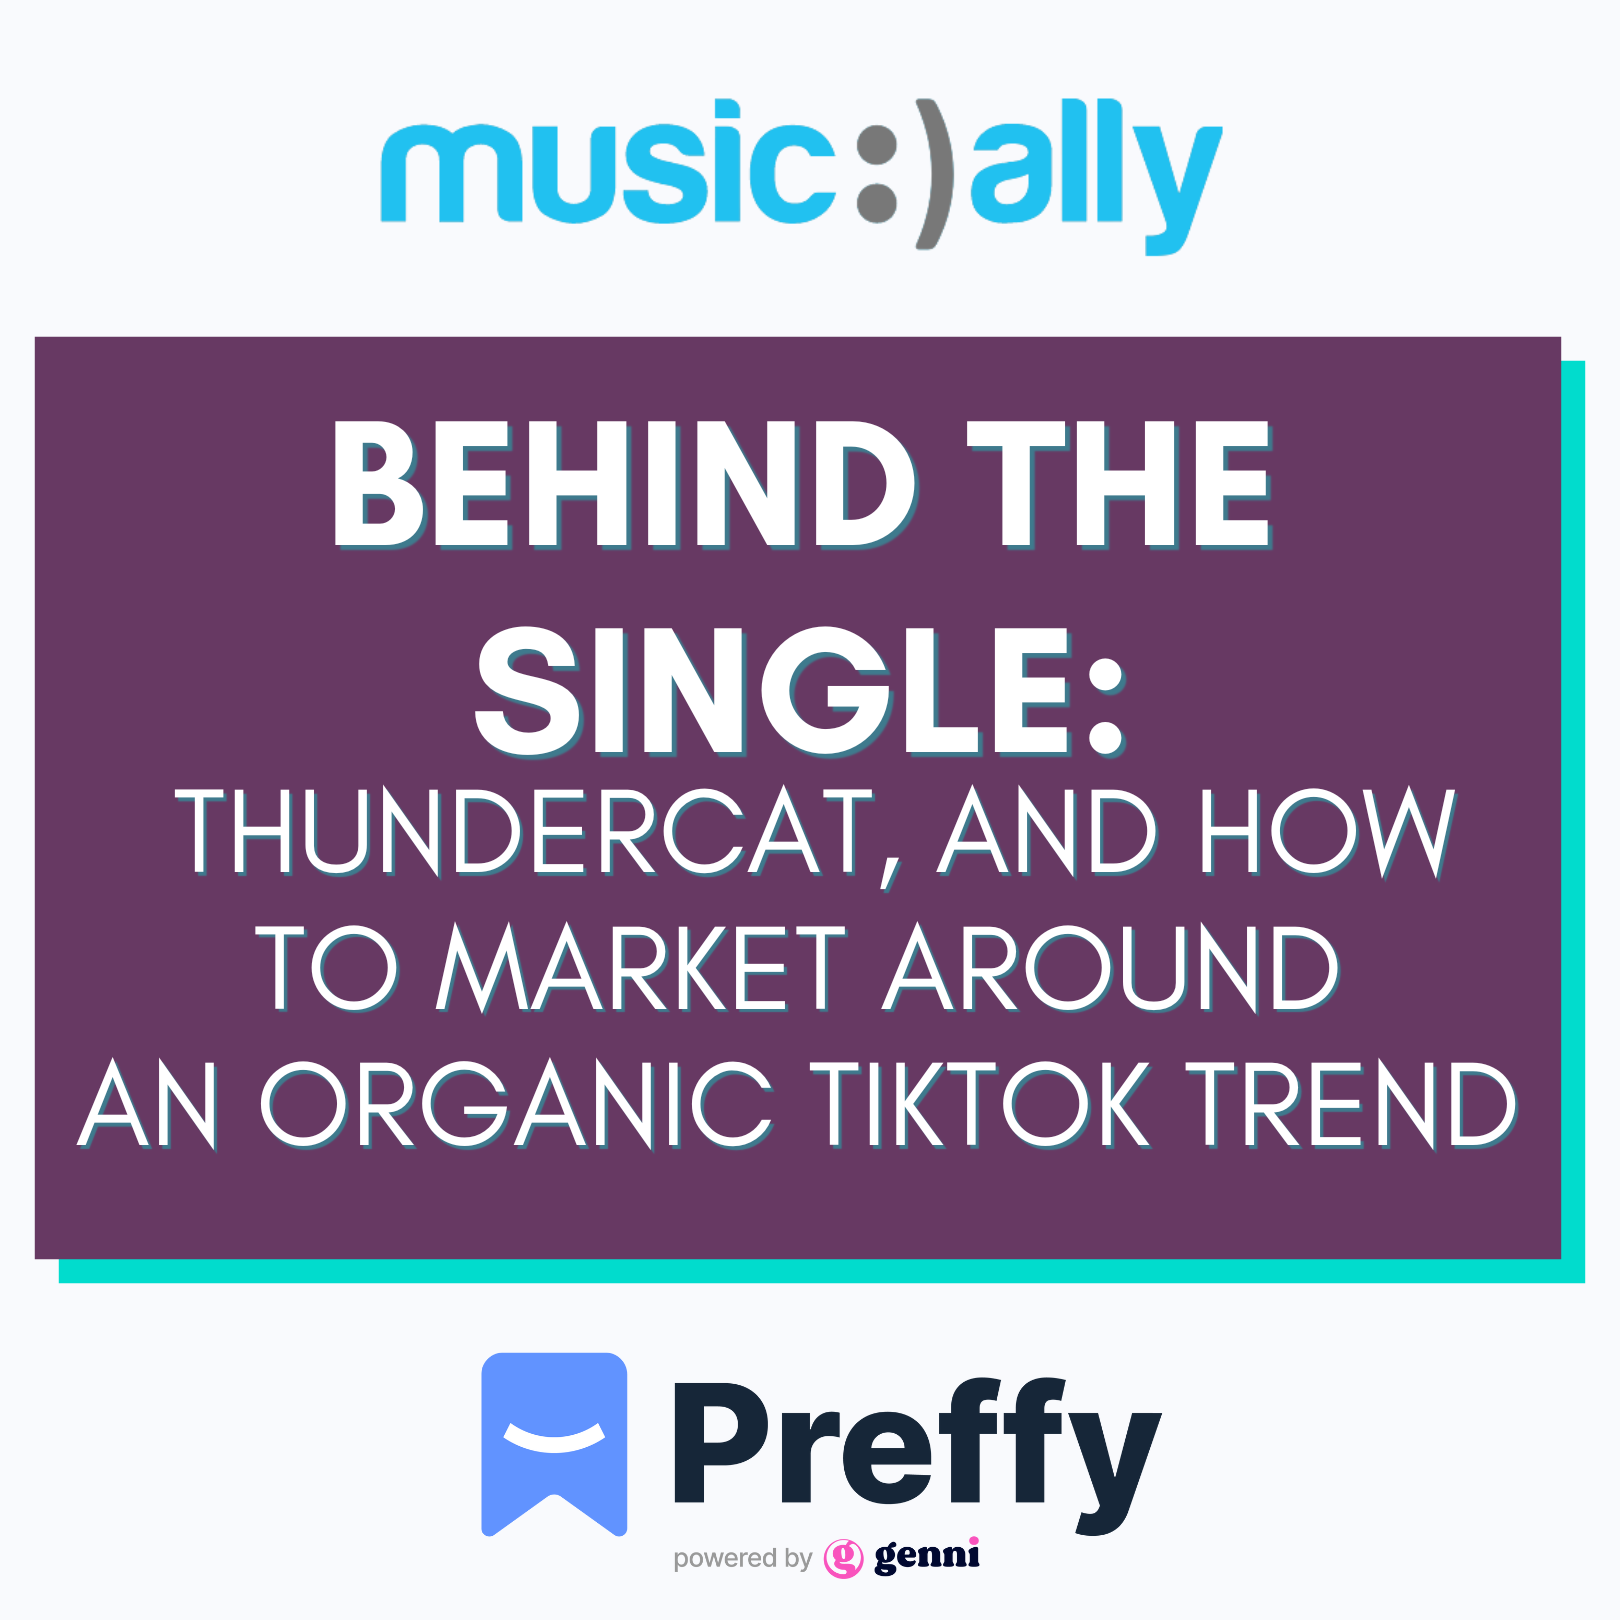 Music Ally Behind the Single - Preffy - Marketing an Organic TikTok Trend campaign